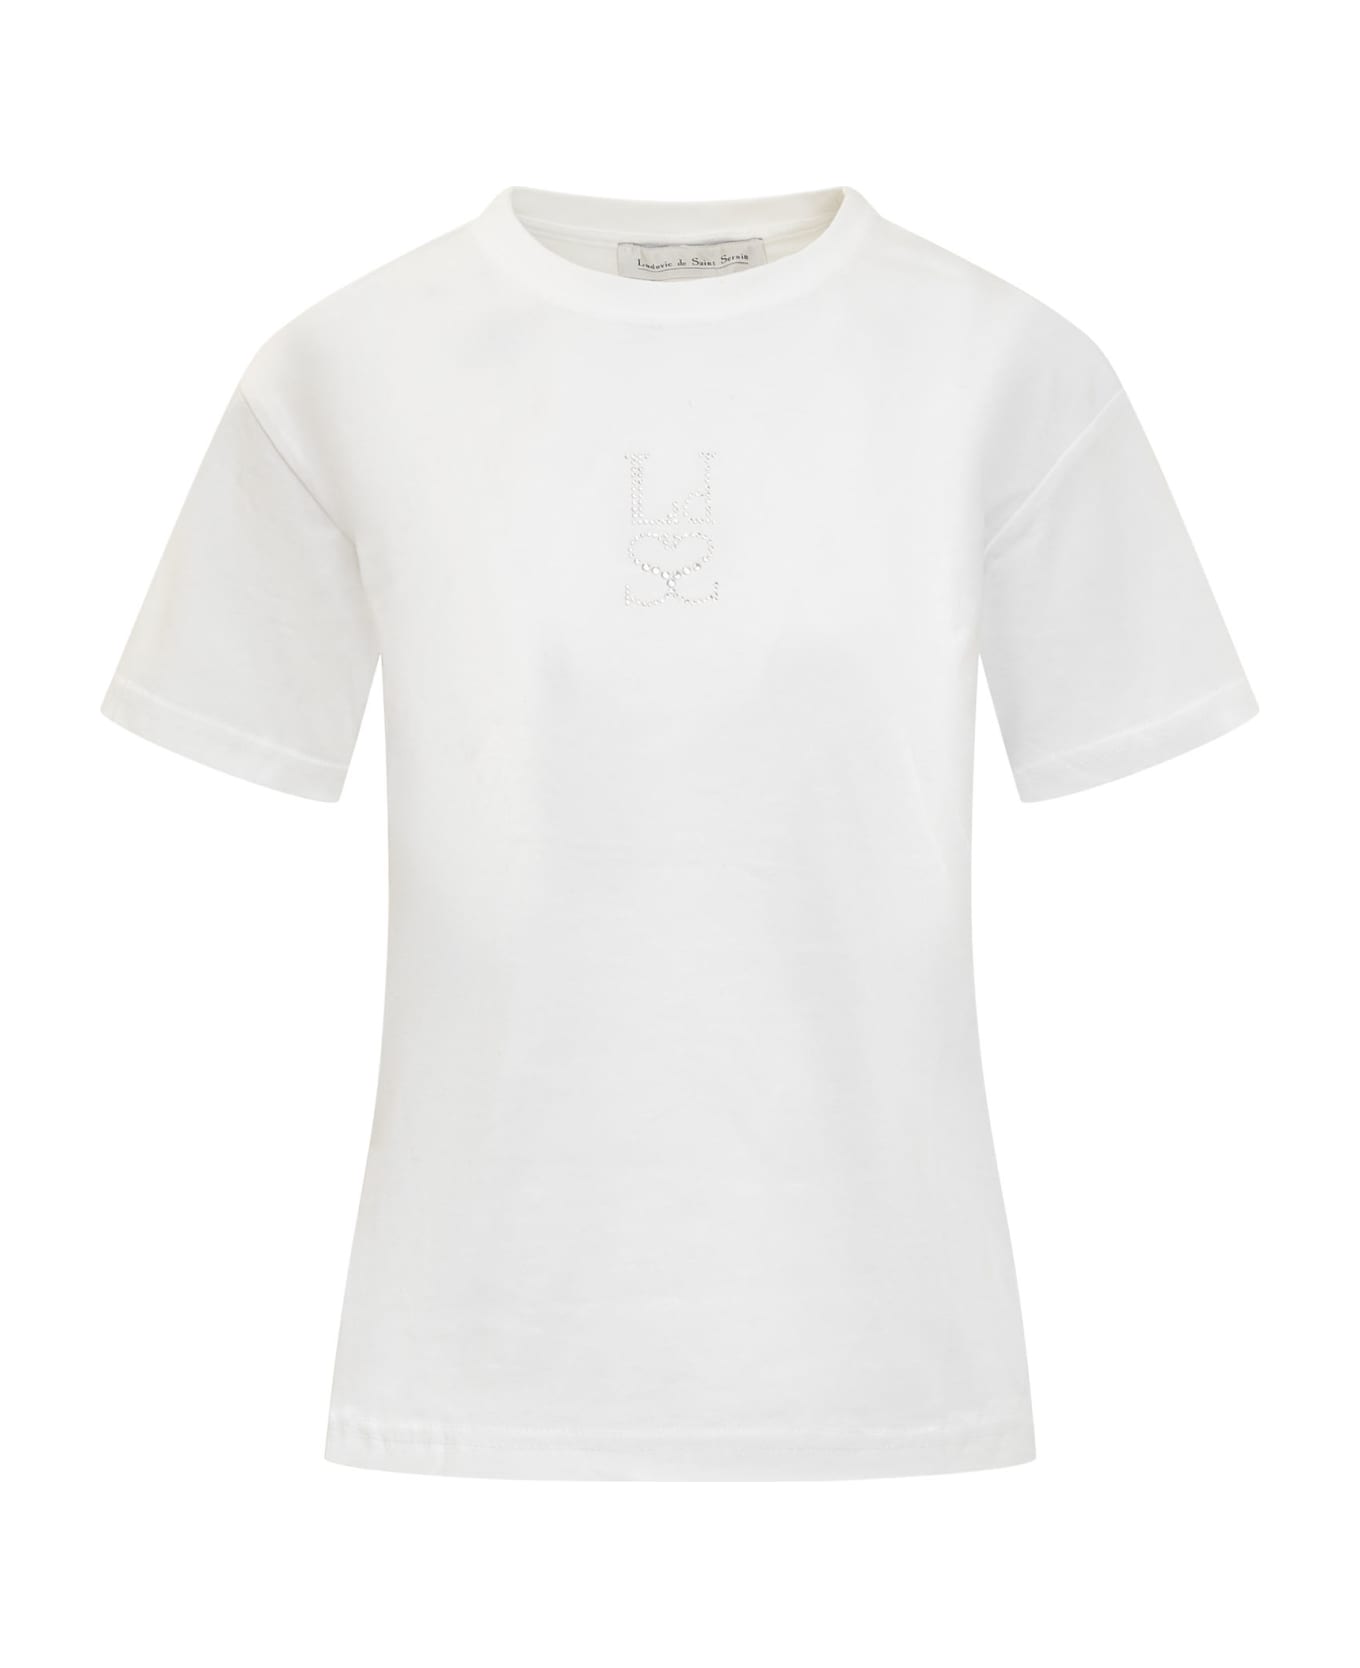 Ludovic de Saint Sernin Crystal T-shirt - White Tシャツ